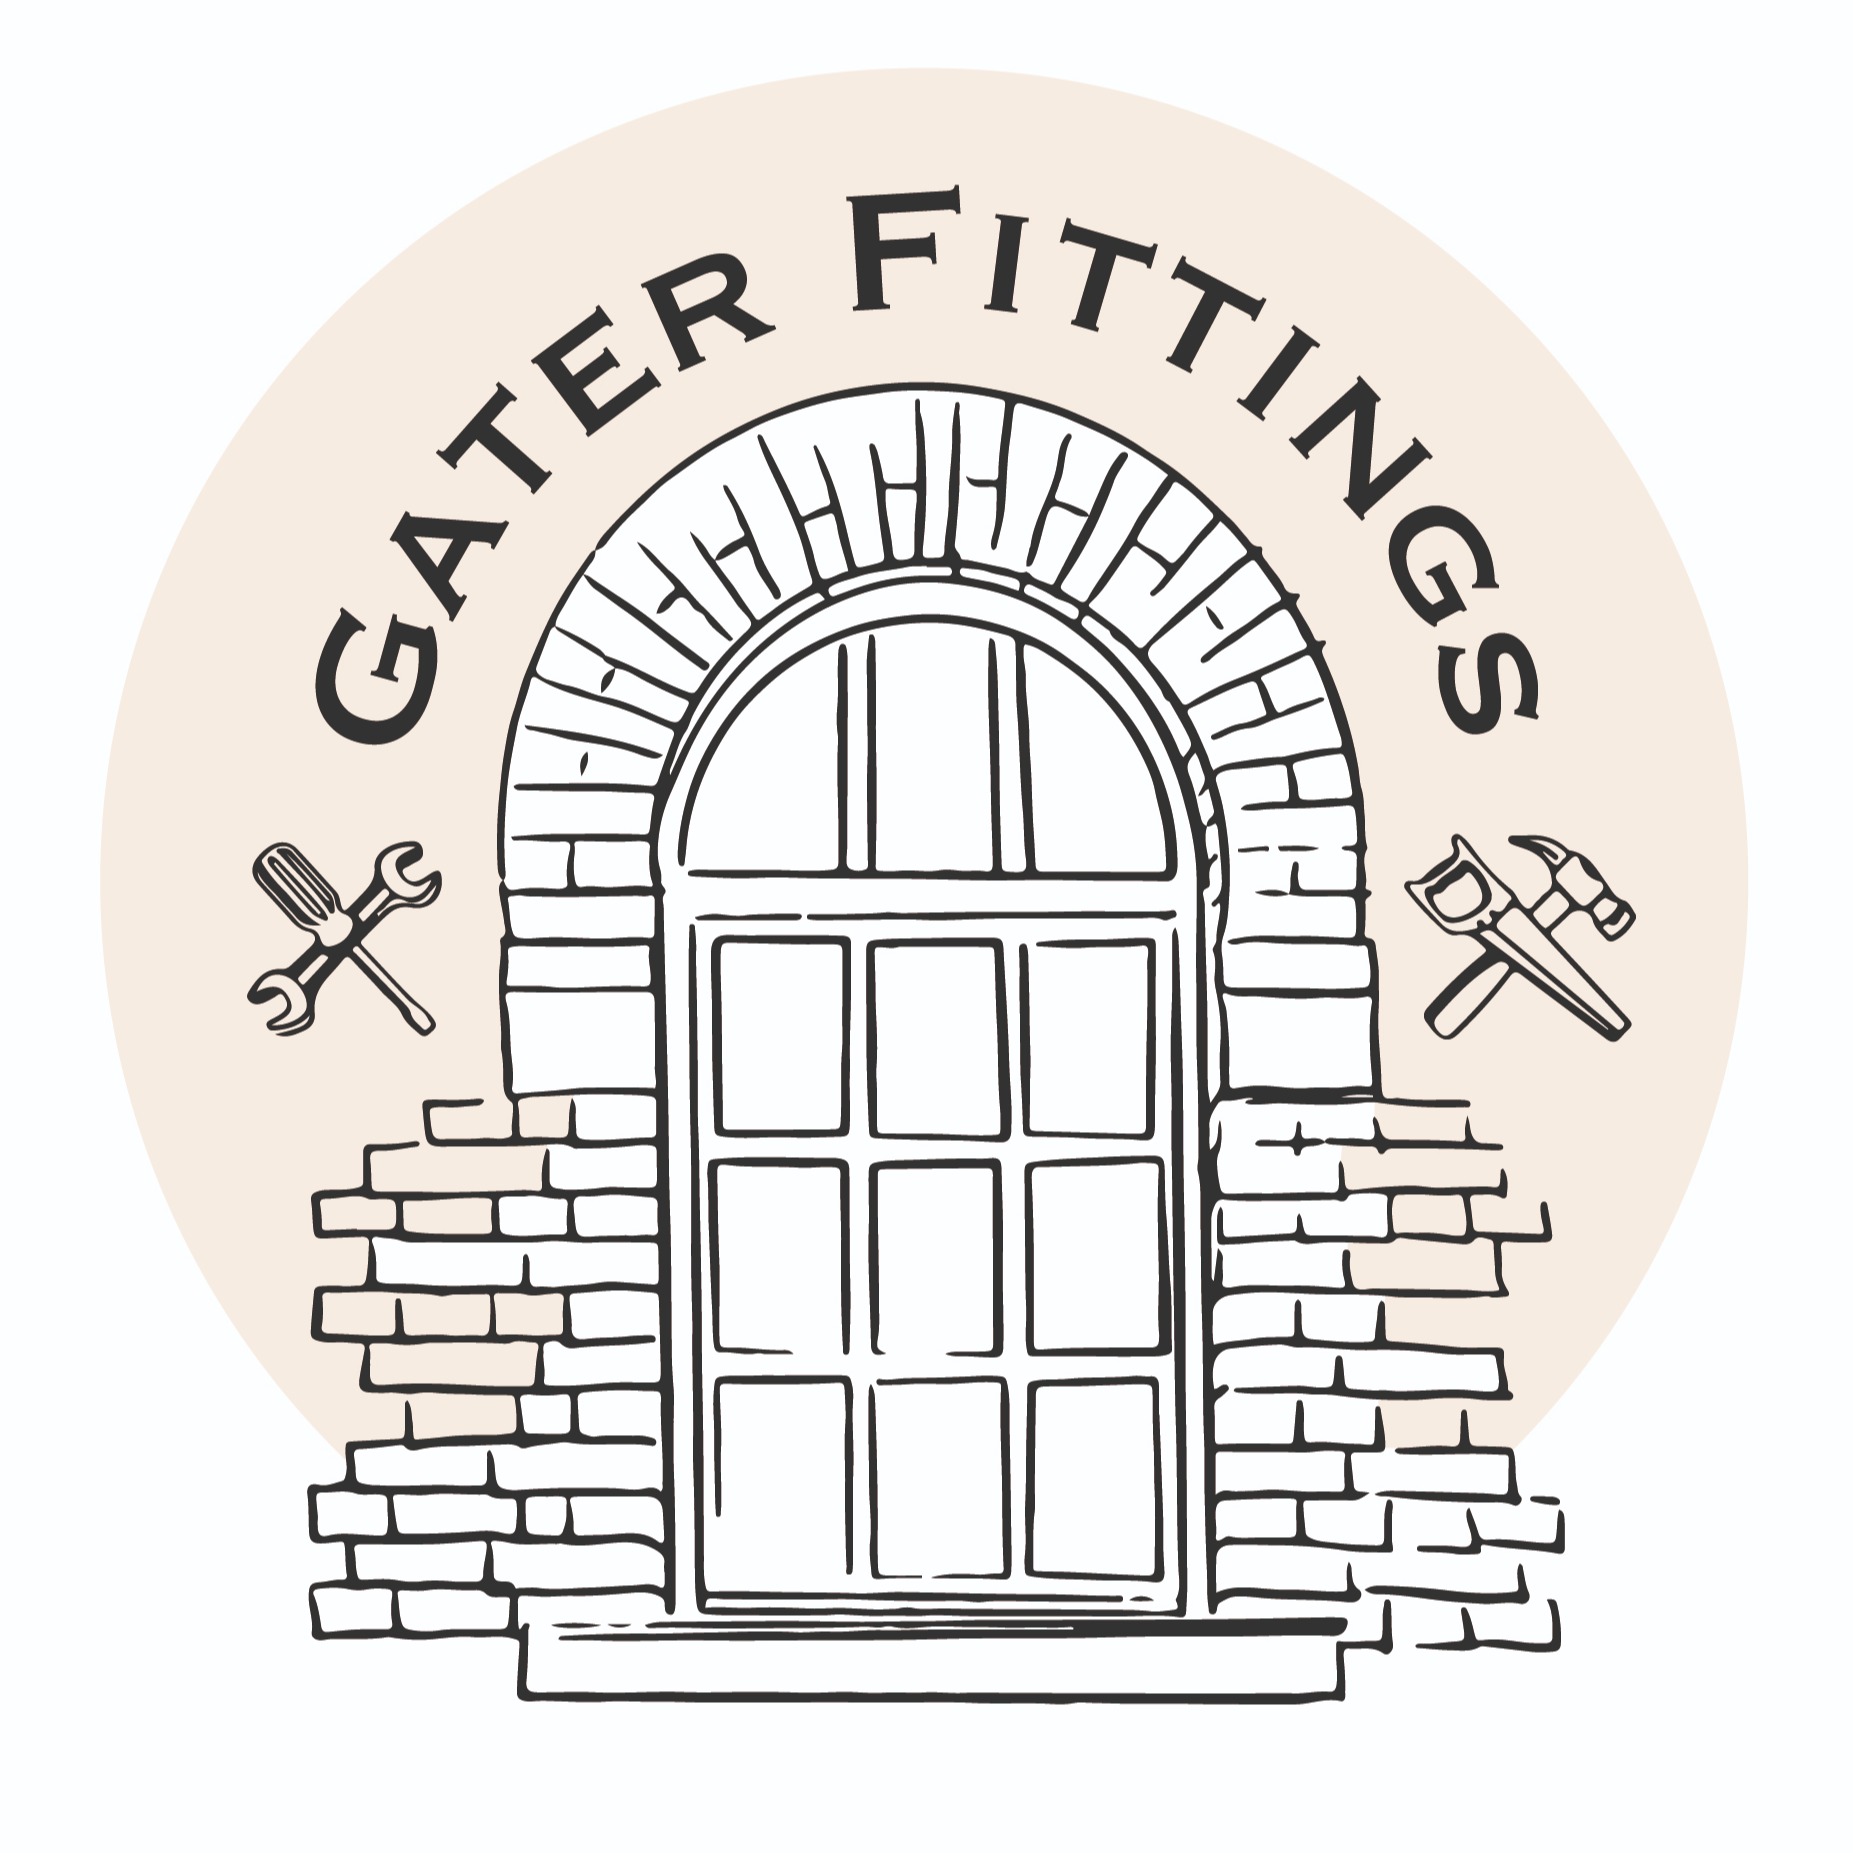 Gater Fittings